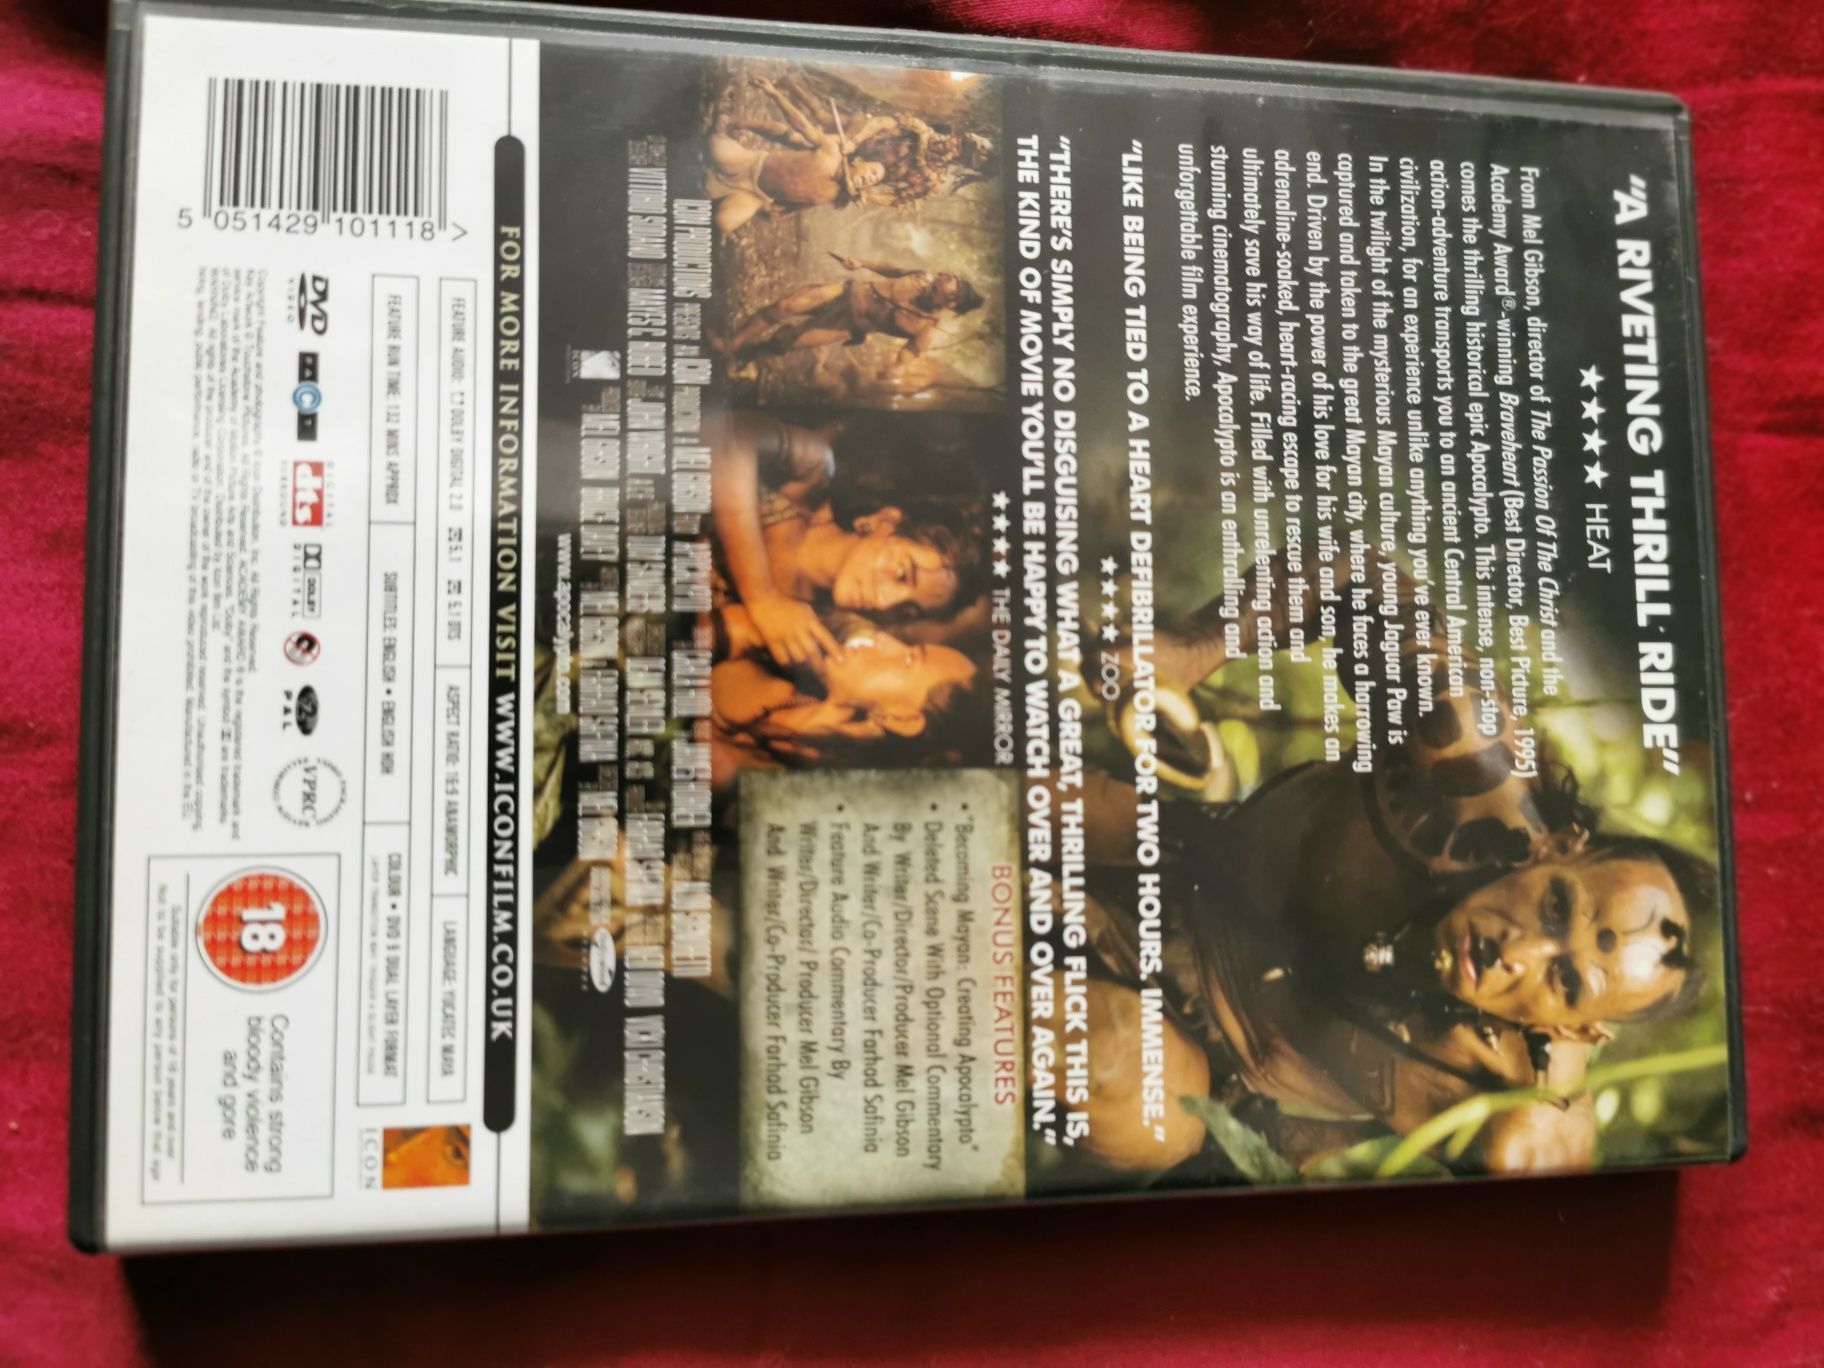 Film DVD "Apocalypto" Mel Gibson